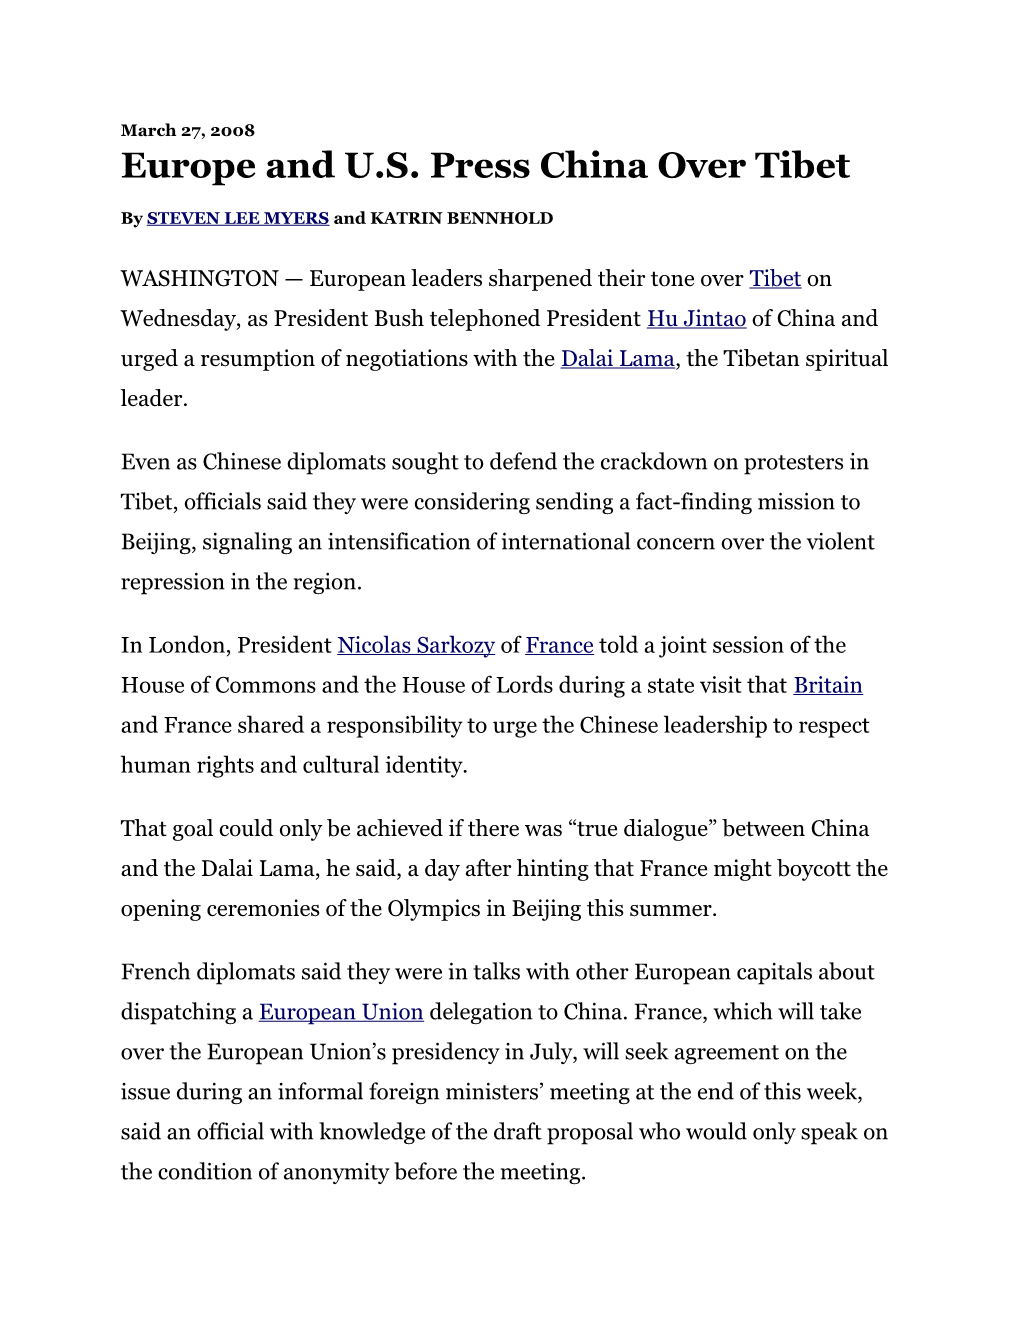 Europe and U.S. Press China Over Tibet